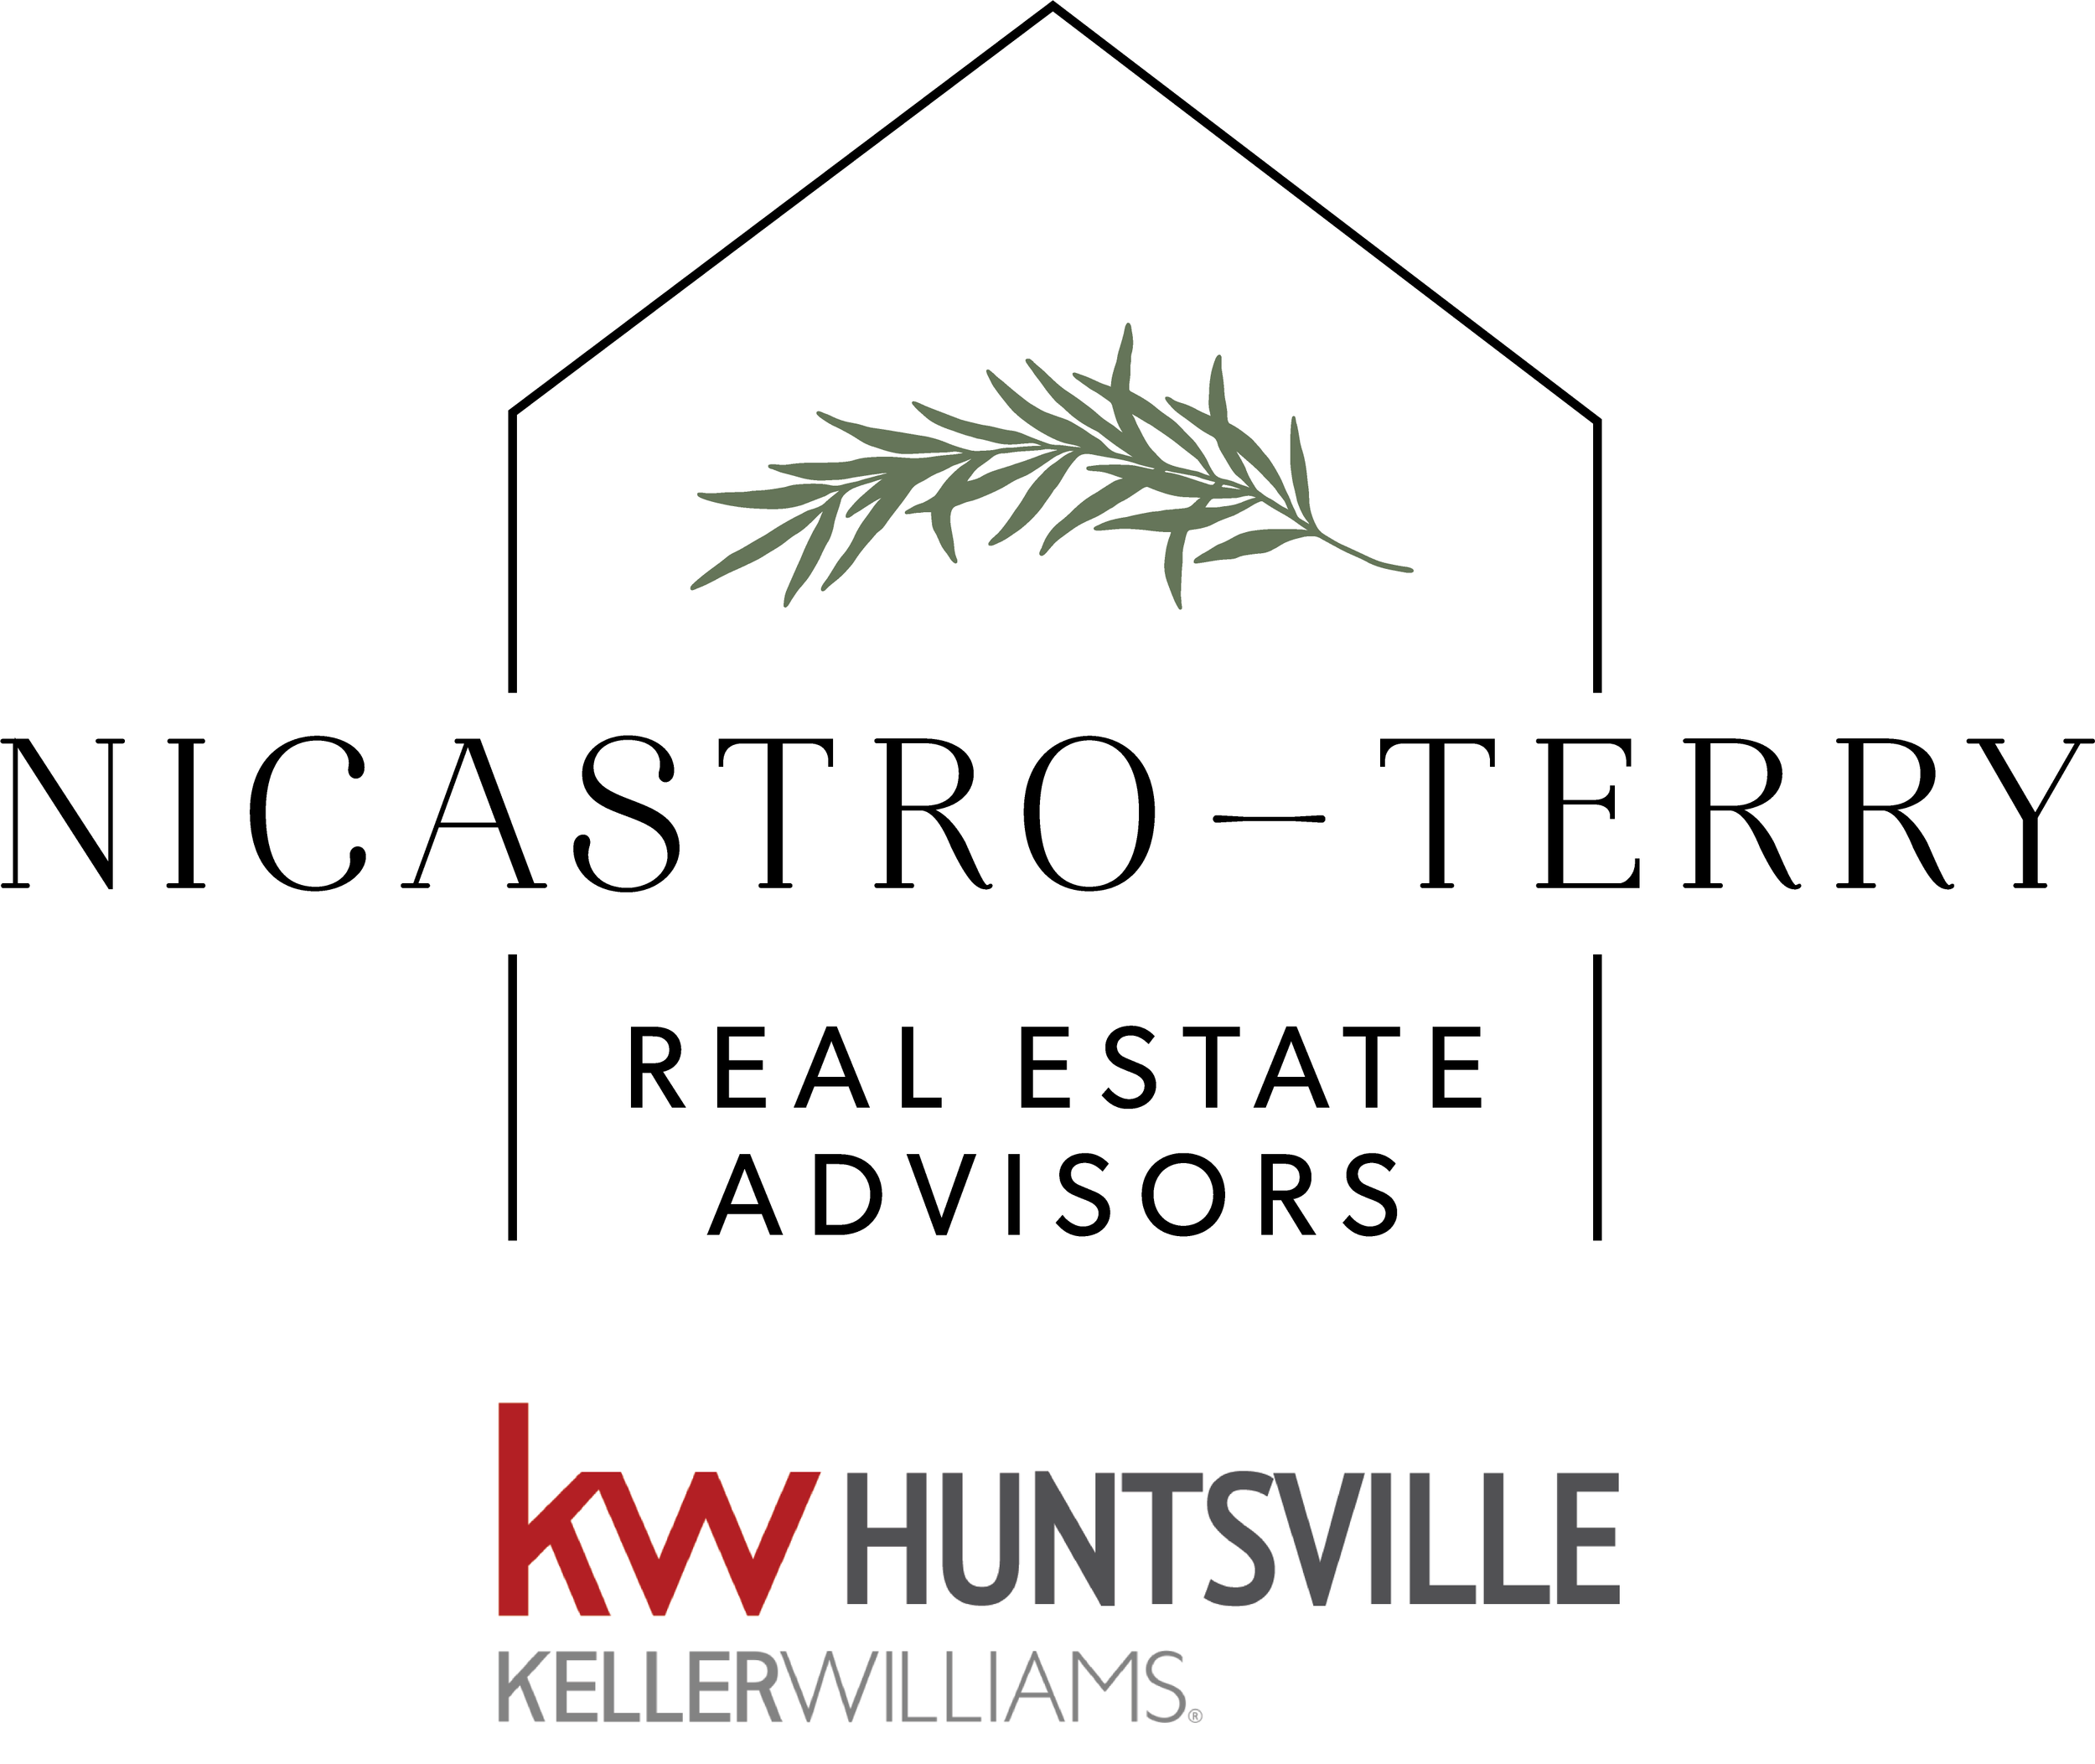 Nicastro-terry Real Estate Advisors